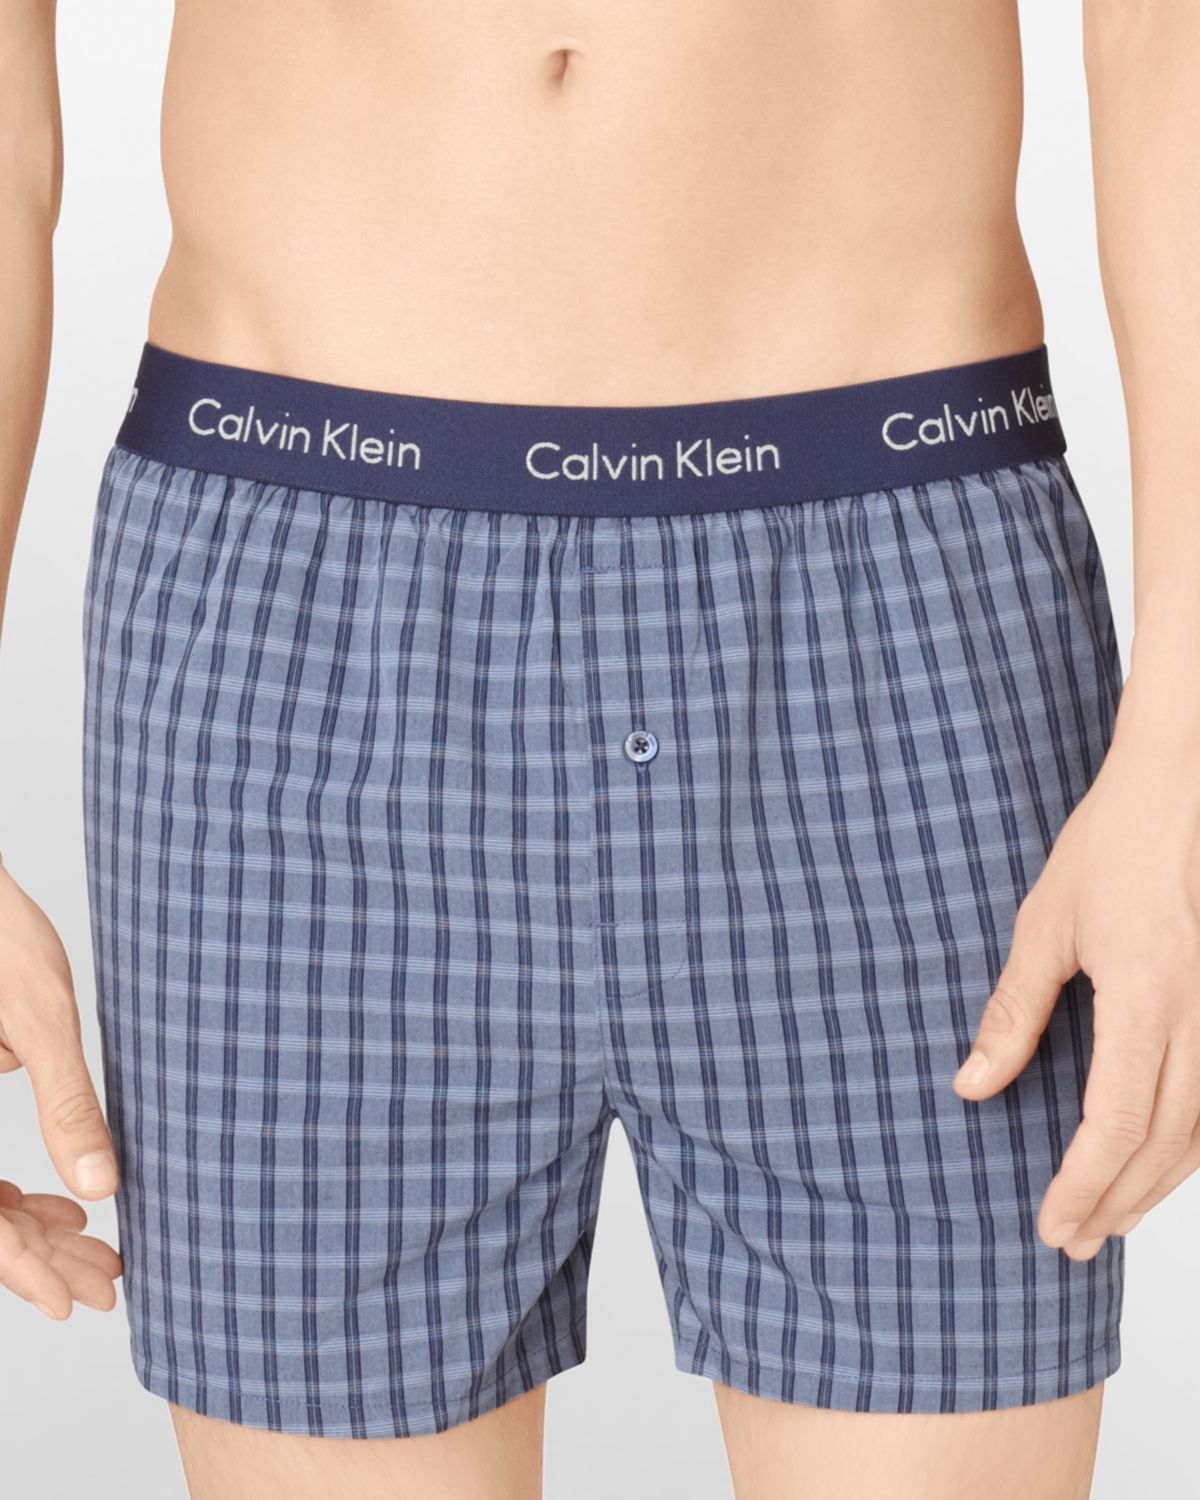 Calvin Klein Cotton Slim Fit Woven Plaid Boxer Shorts in Blue for Men - Lyst